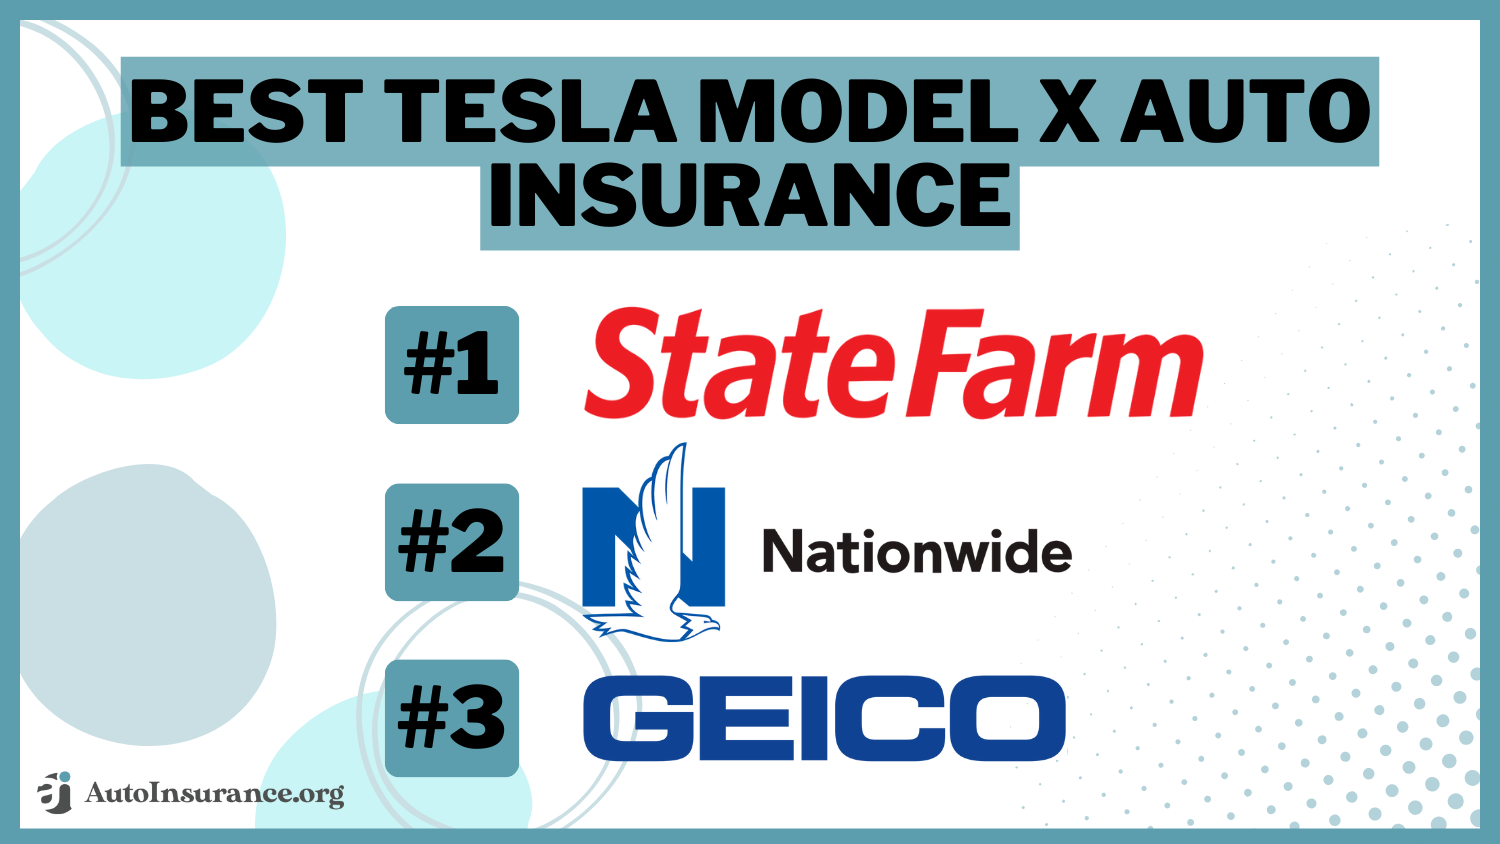 Best Tesla Model X Auto Insurance - State Farm, Nationwide, Geico